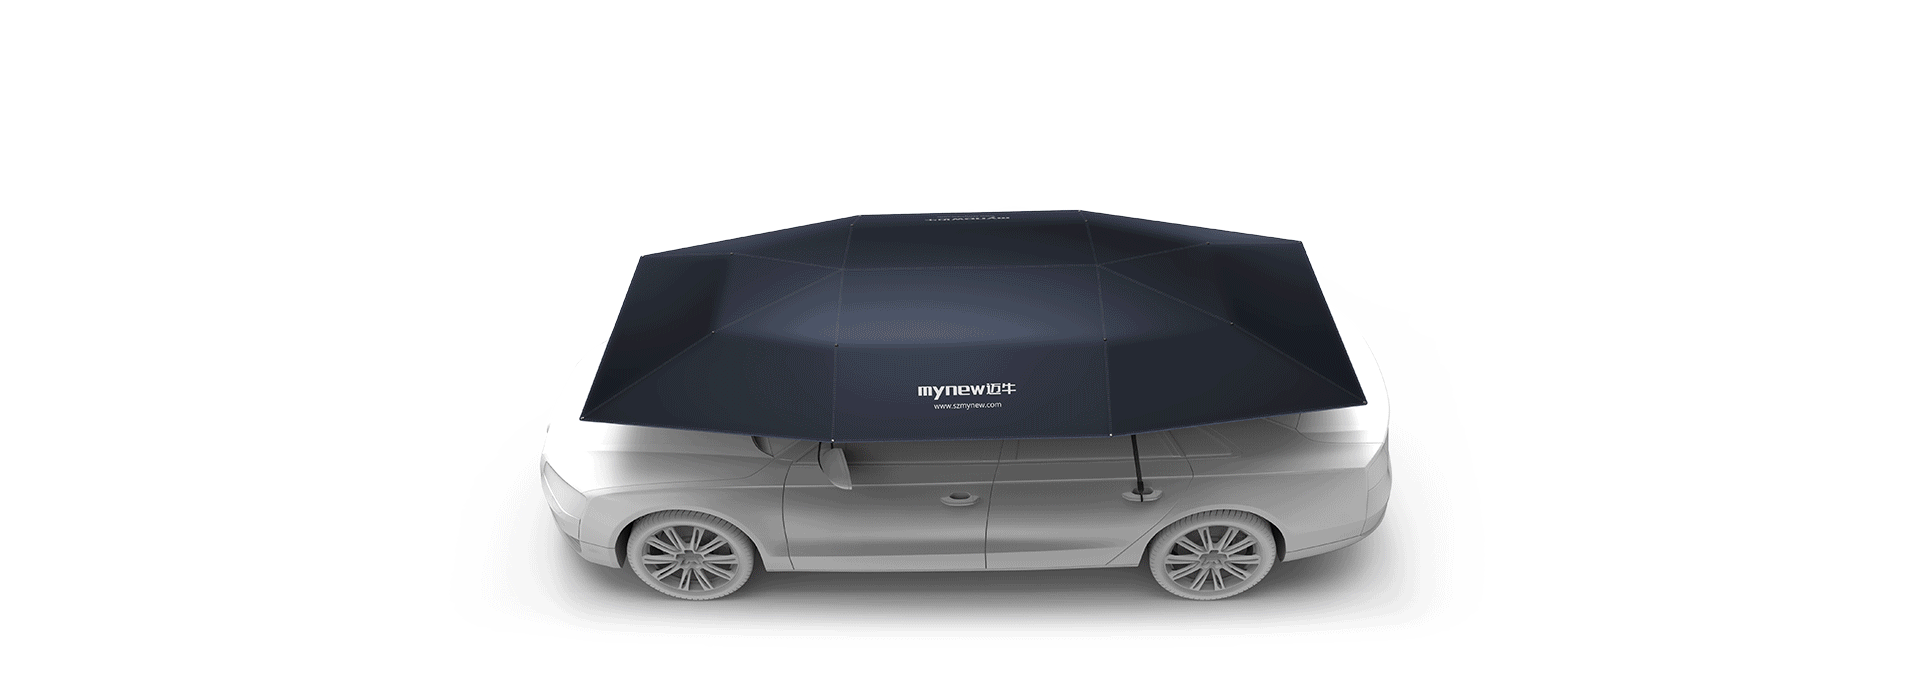 mynew-car-umbrella-Personalized-Design2